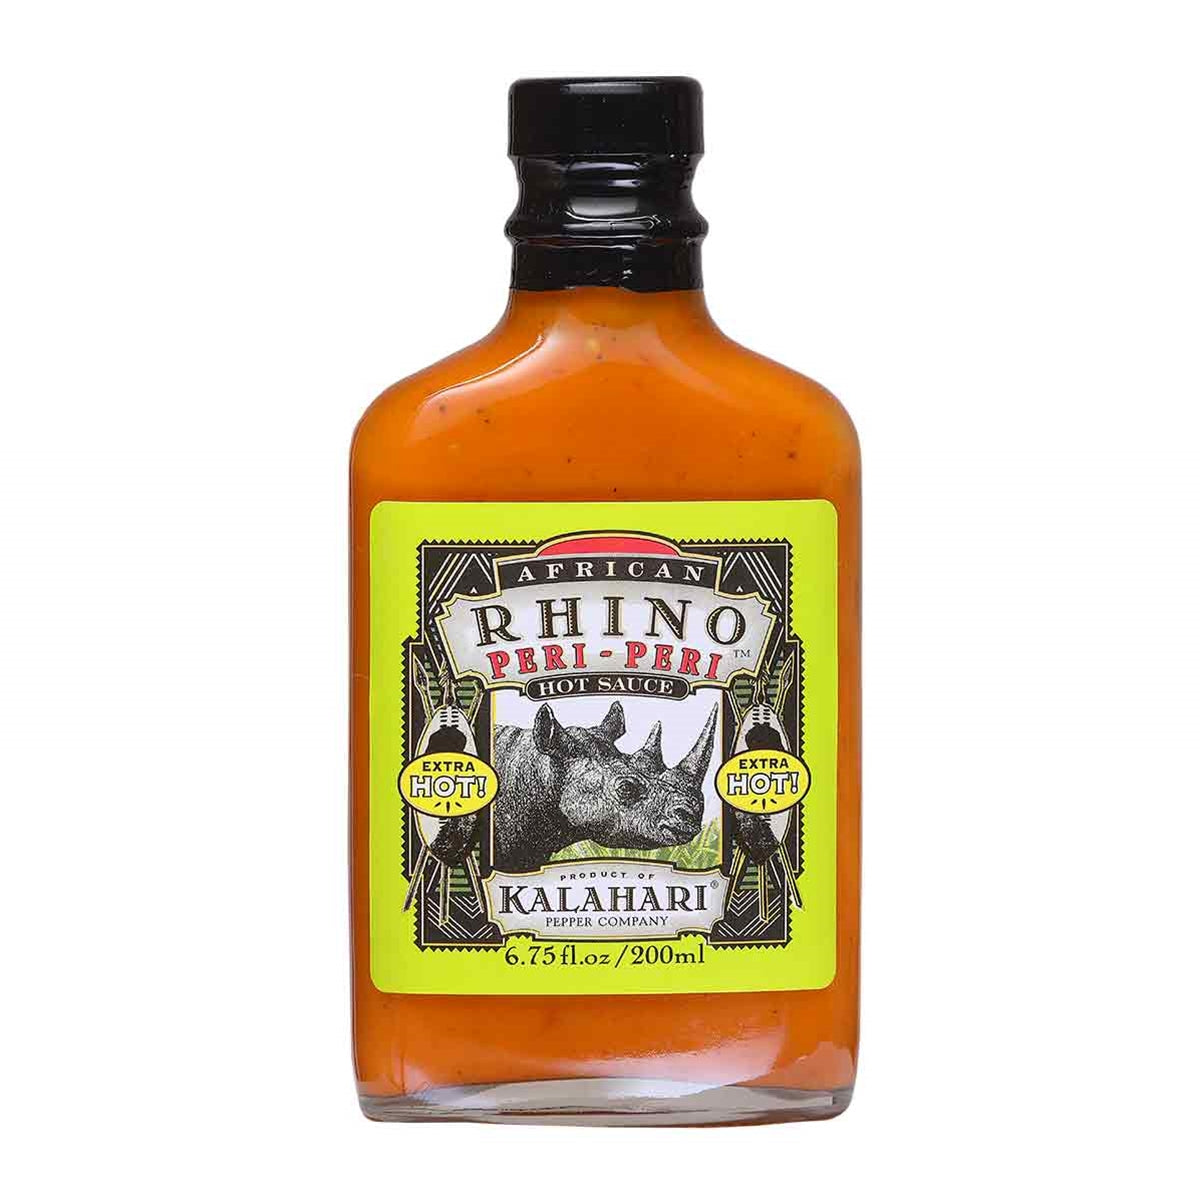 Hot Sauce African Rhino Per Peri Extra Hot 6.75 oz Flask Heat 9